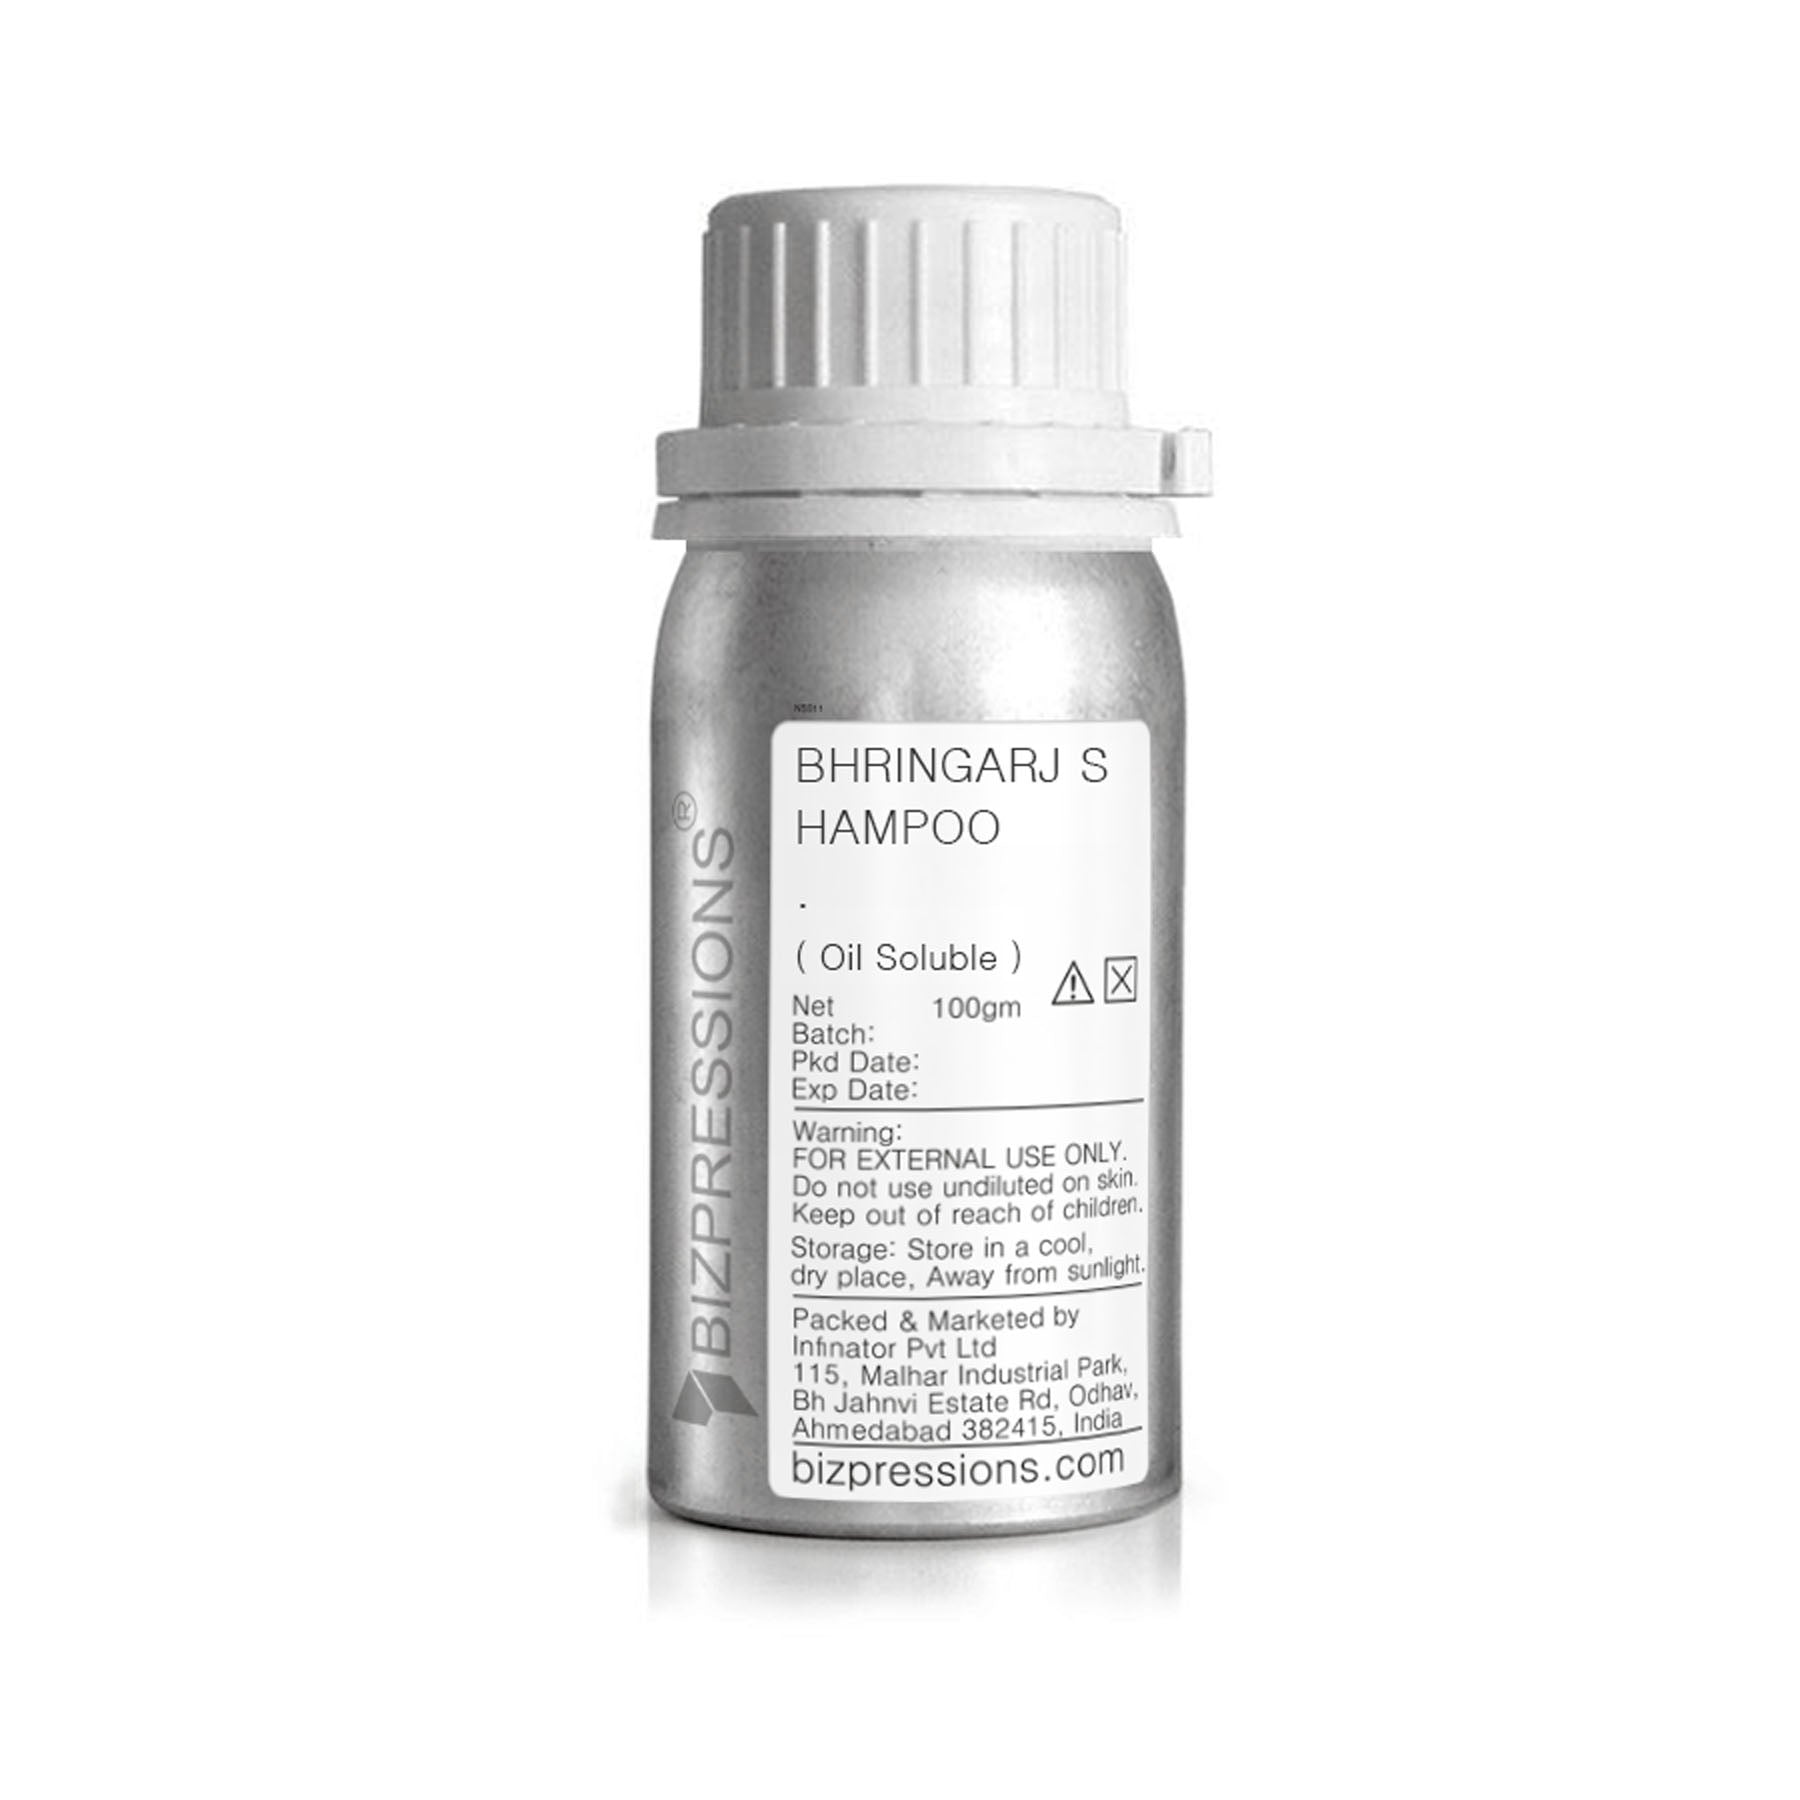 BHRINGARJ SHAMPOO - Fragrance ( Oil Soluble ) - 100 gm